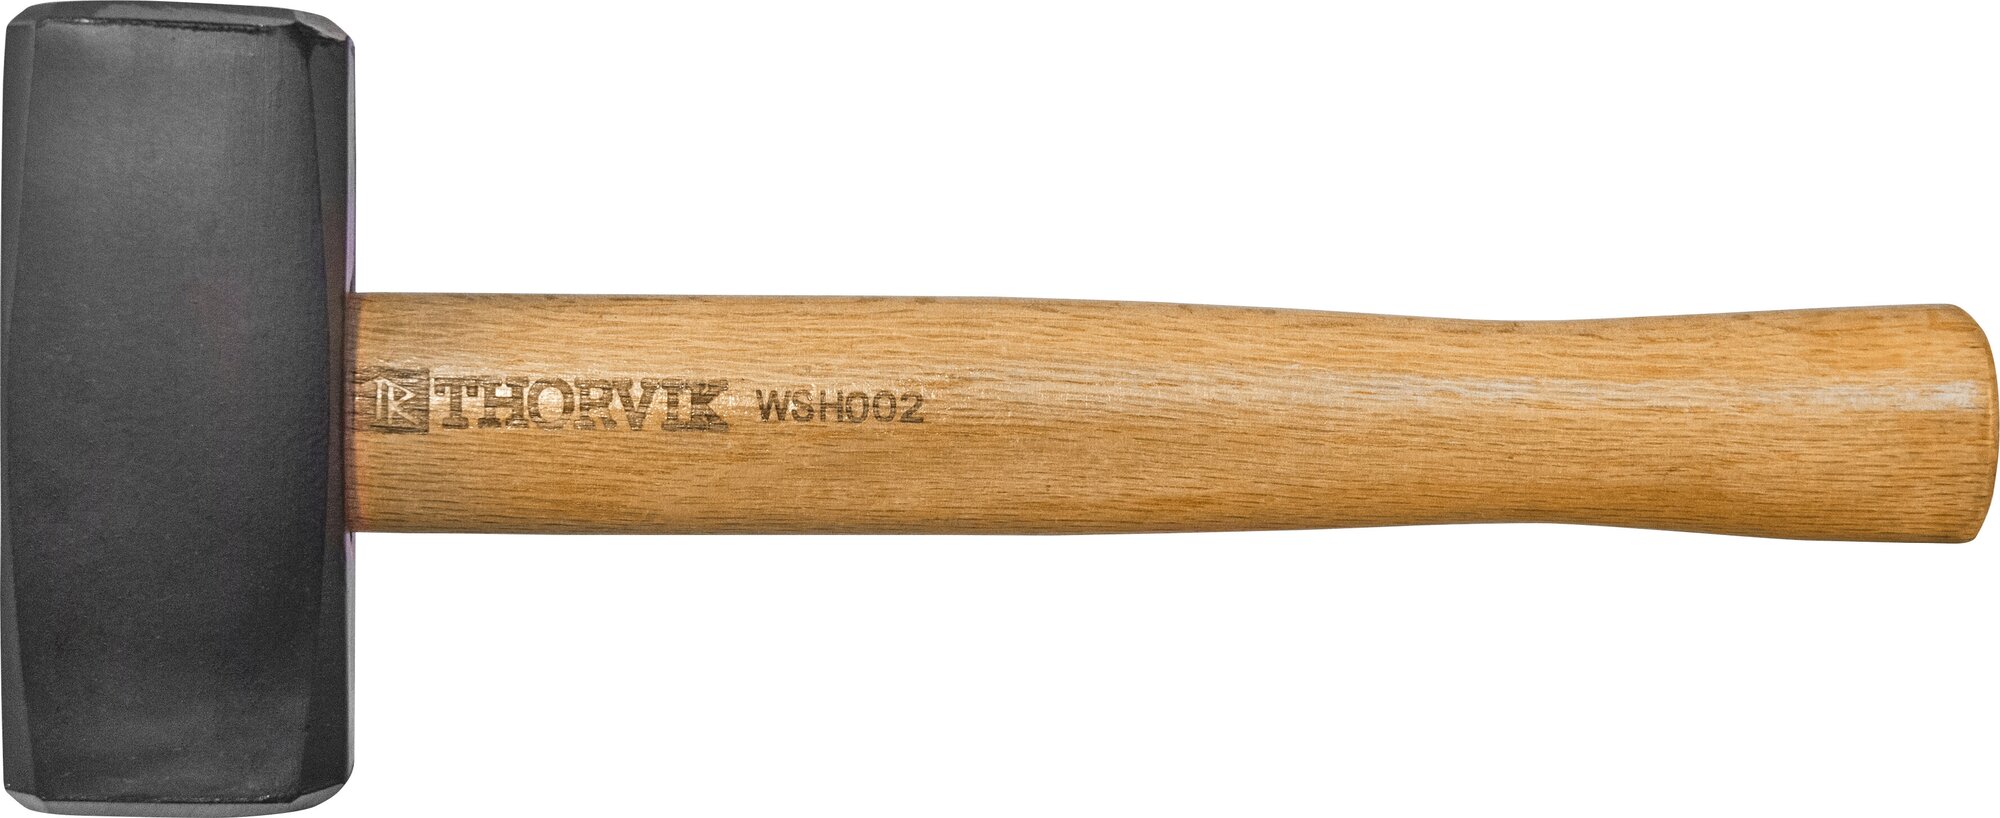 WSH125 Кувалда с деревянной рукояткой, 1.25 кг.